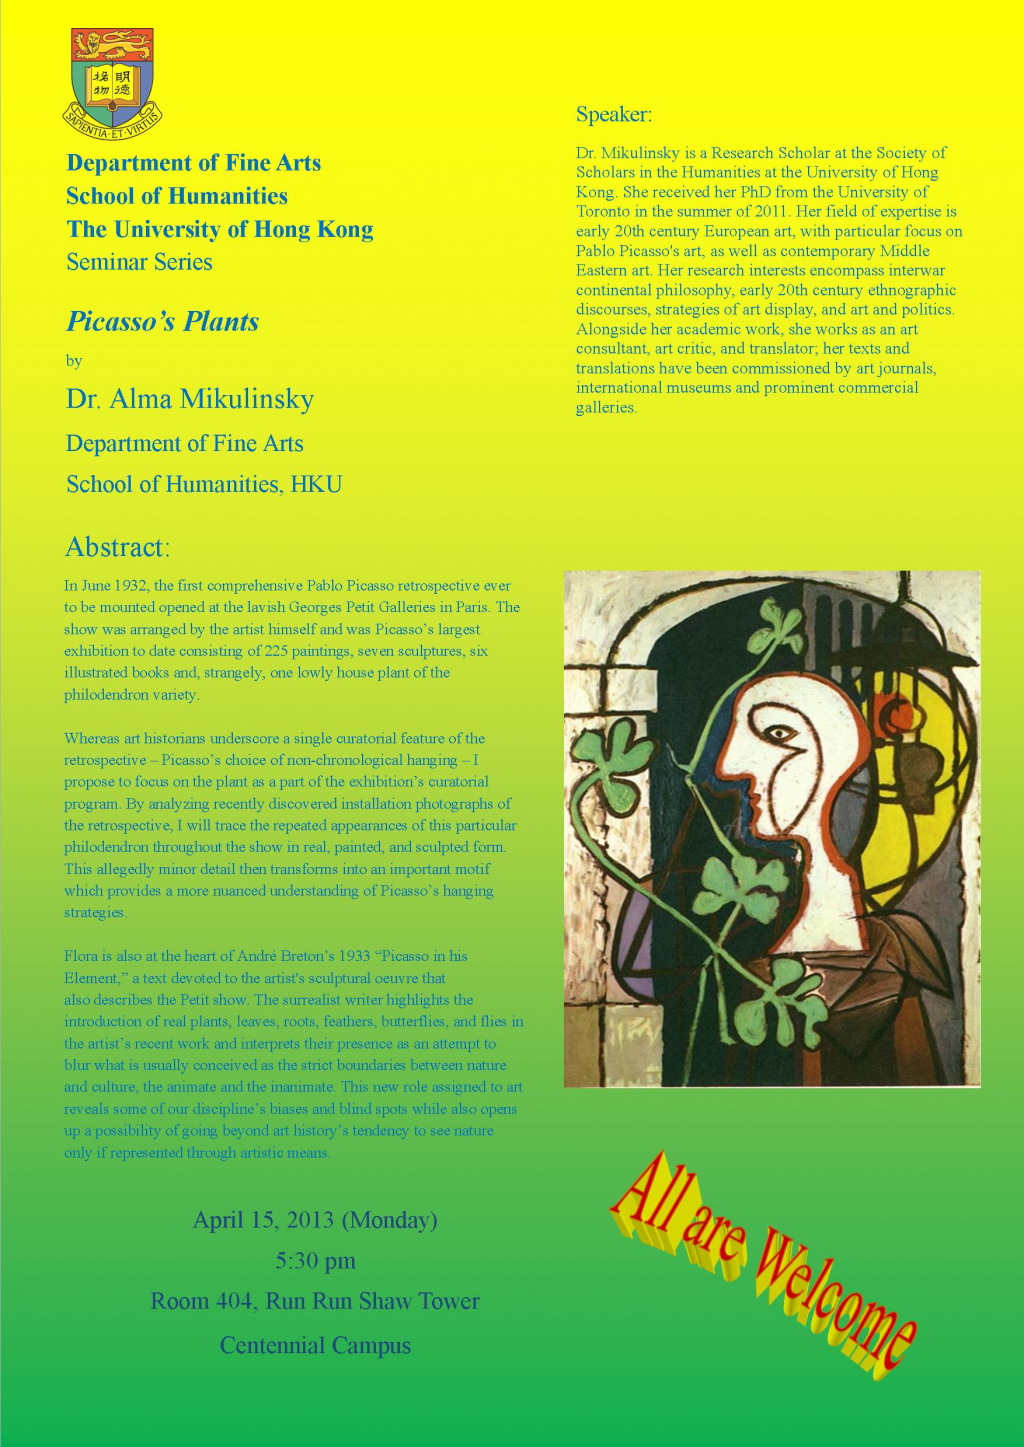 Seminar by Dr. Alma Mikulinsky at Department of Fine Arts, HKU